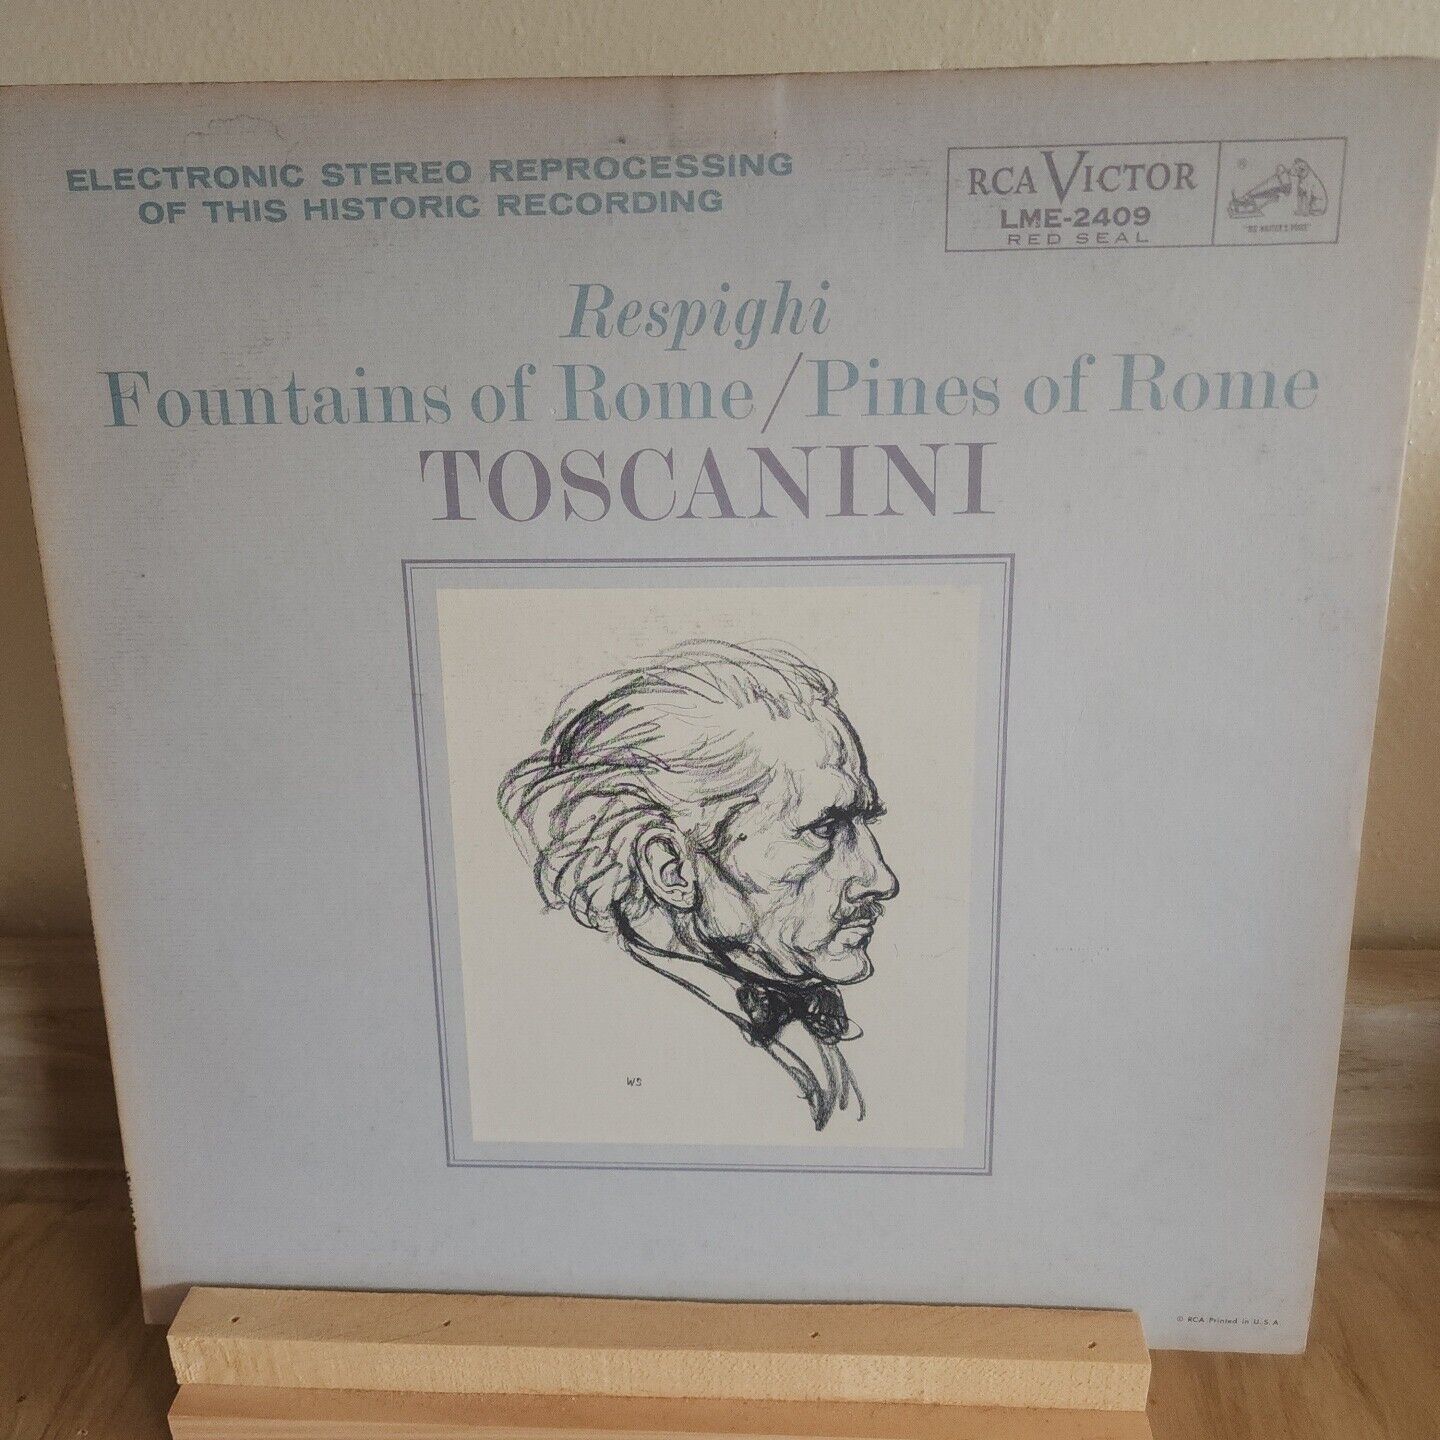 TOSCANINI-RESPIGHI-FOUNTAINS of ROME-ORIGINAL RCA VICTOR RED SEAL LME-2409 VINYL